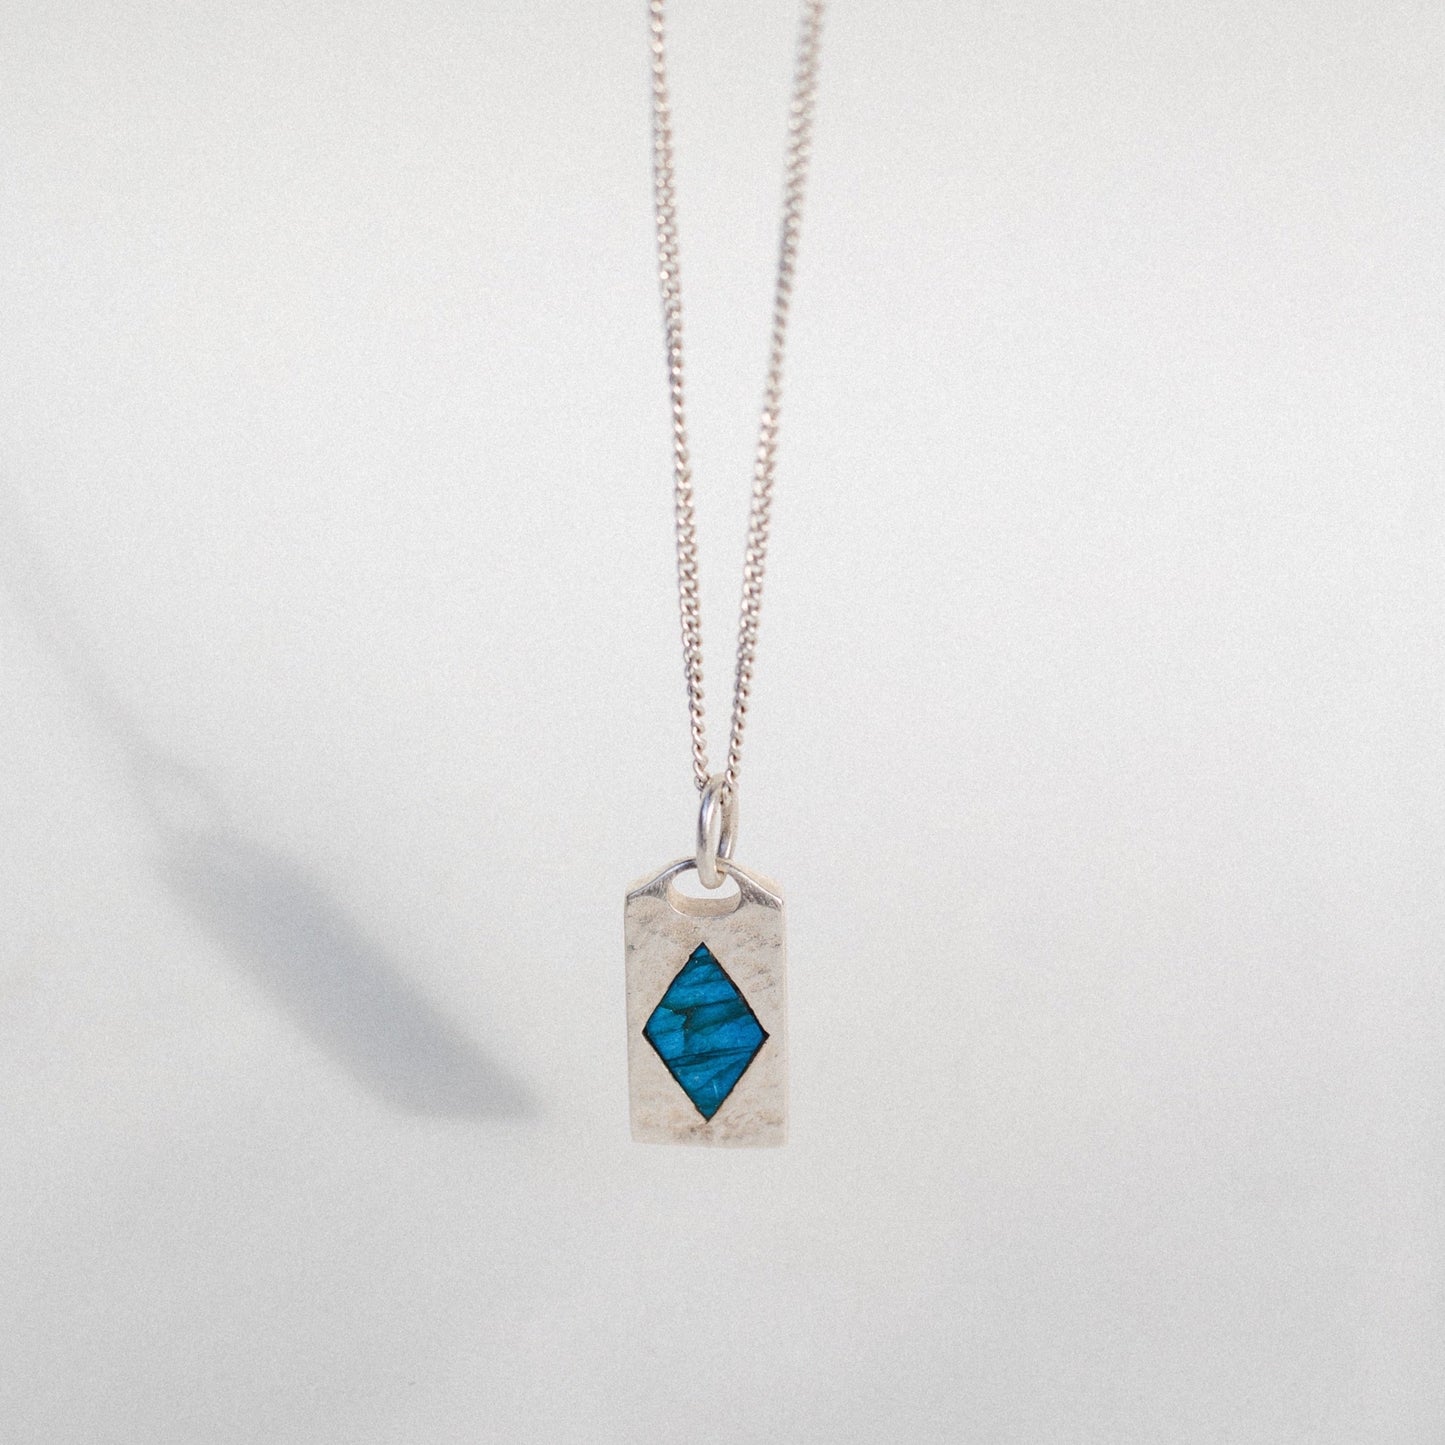 Diamond Labradorite 925 silver pendant